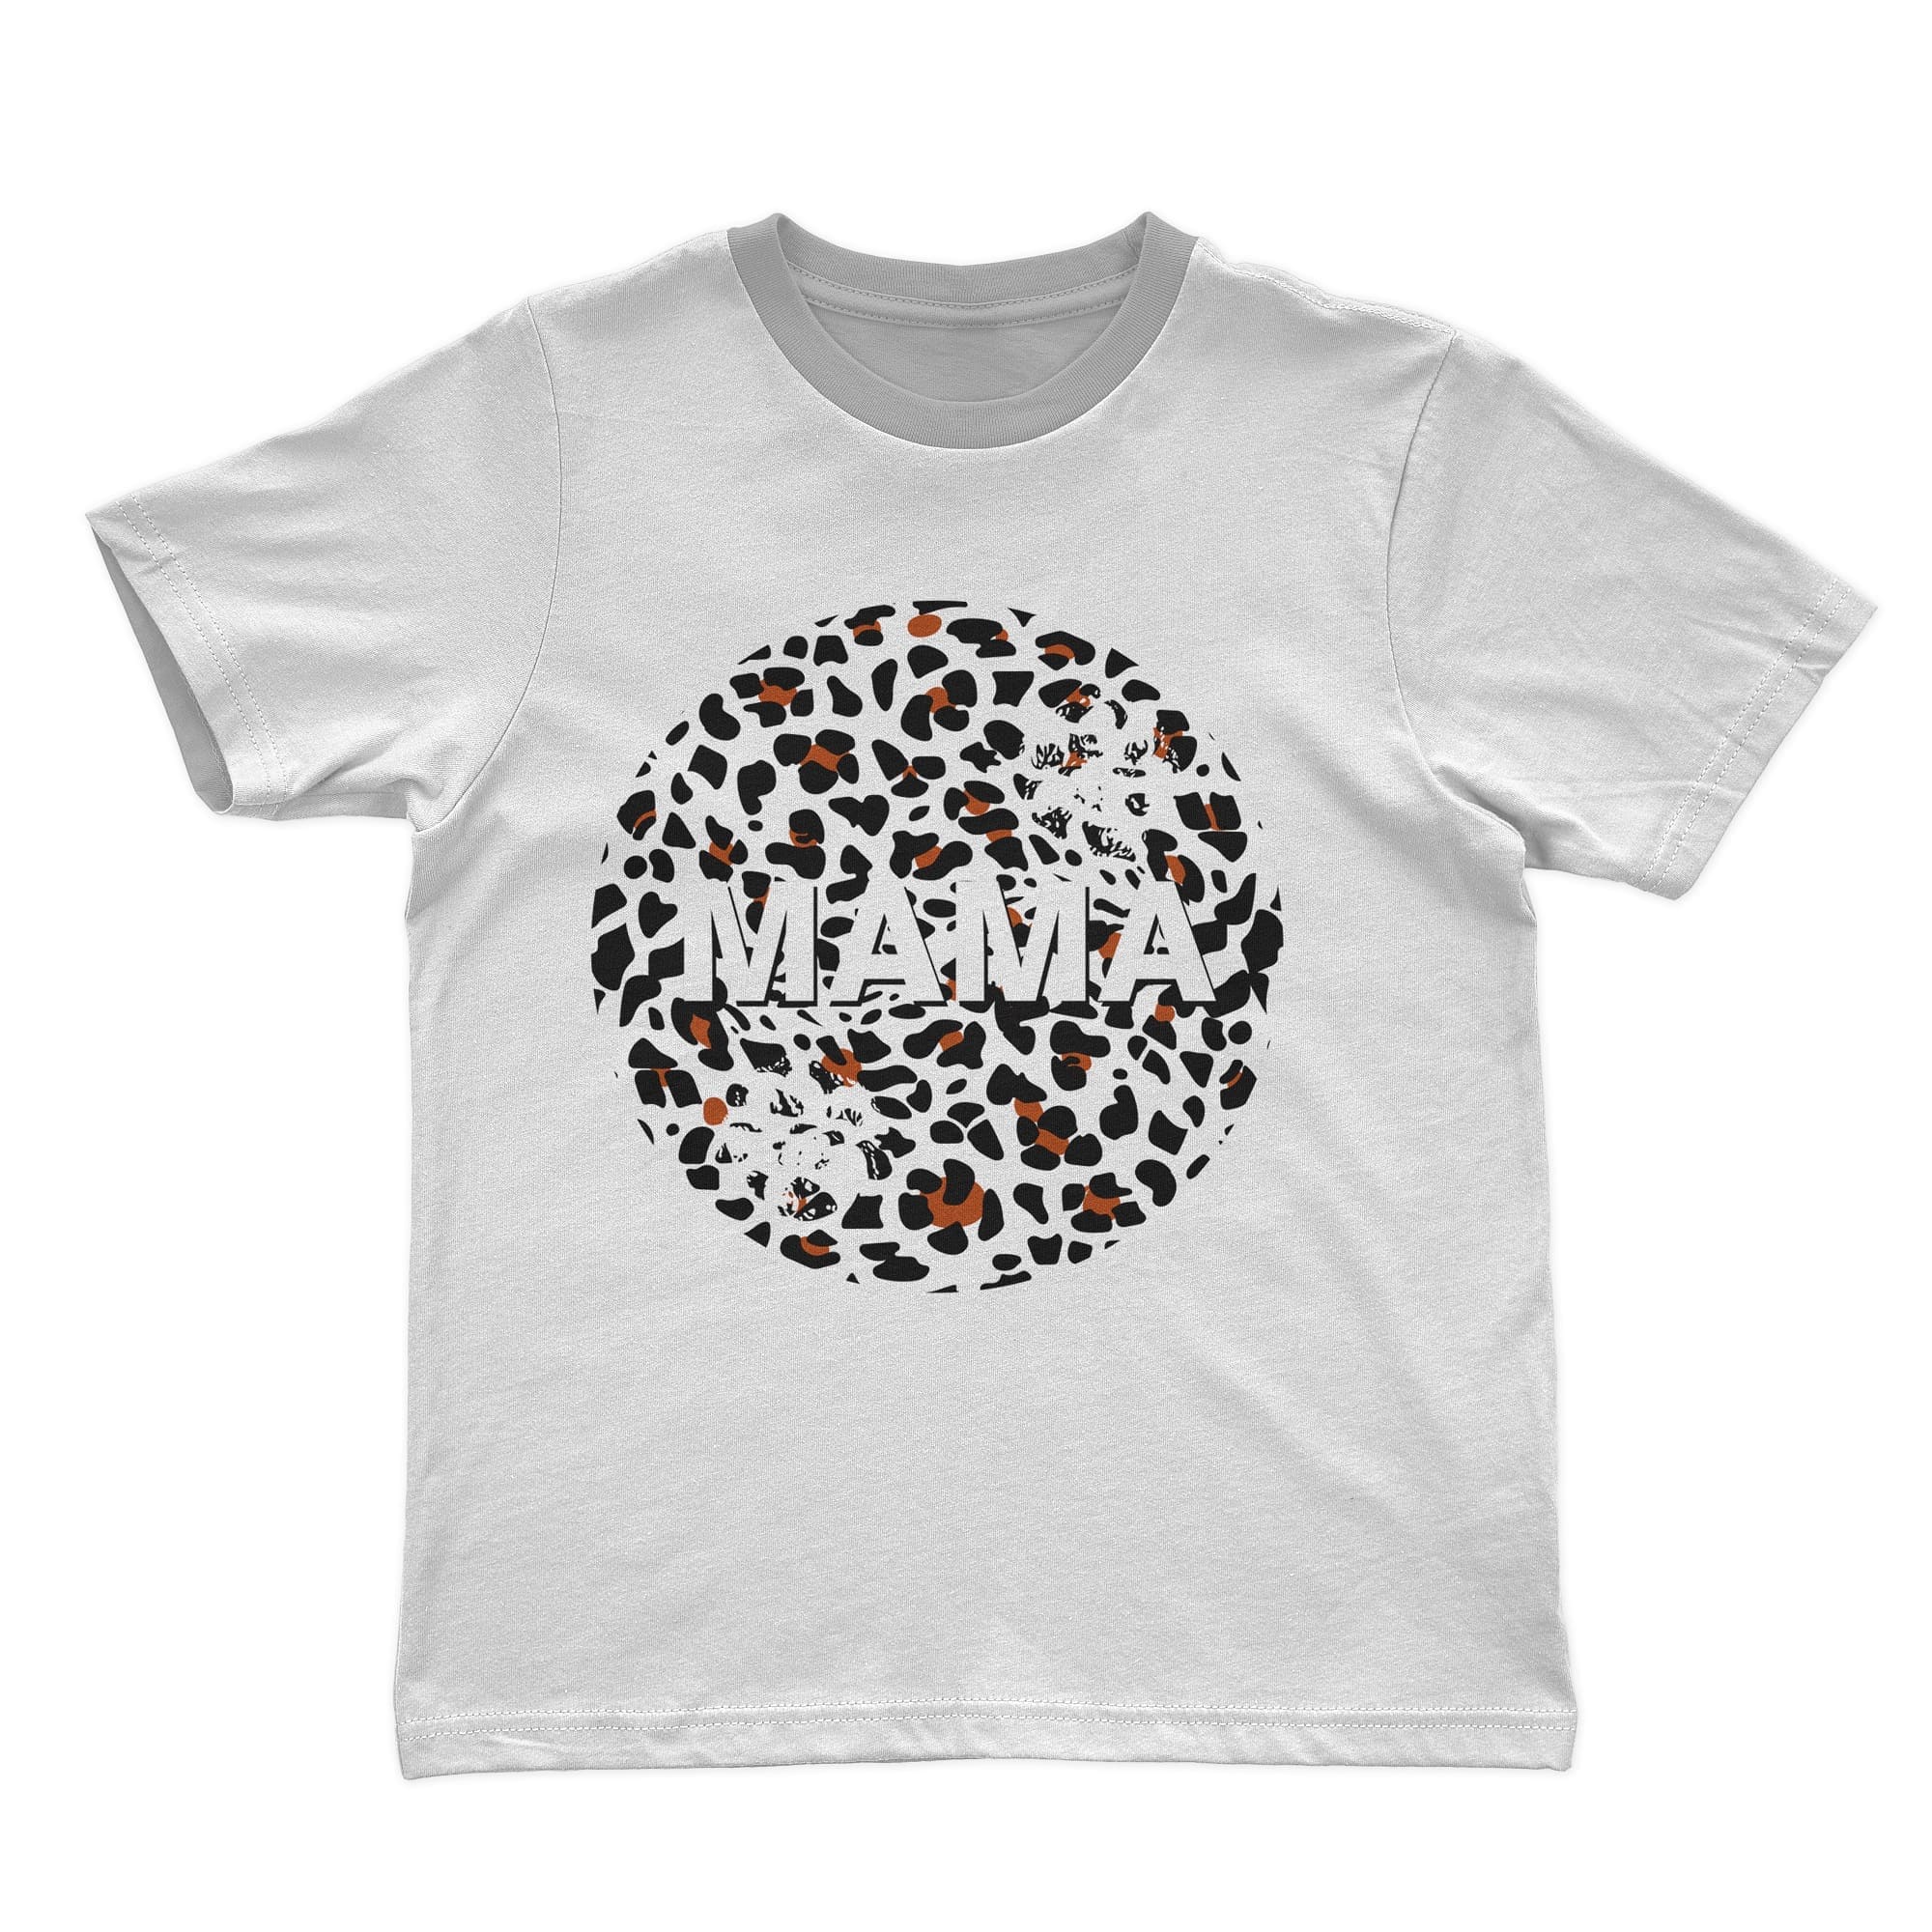 Leopard ball on a white T-shirt.